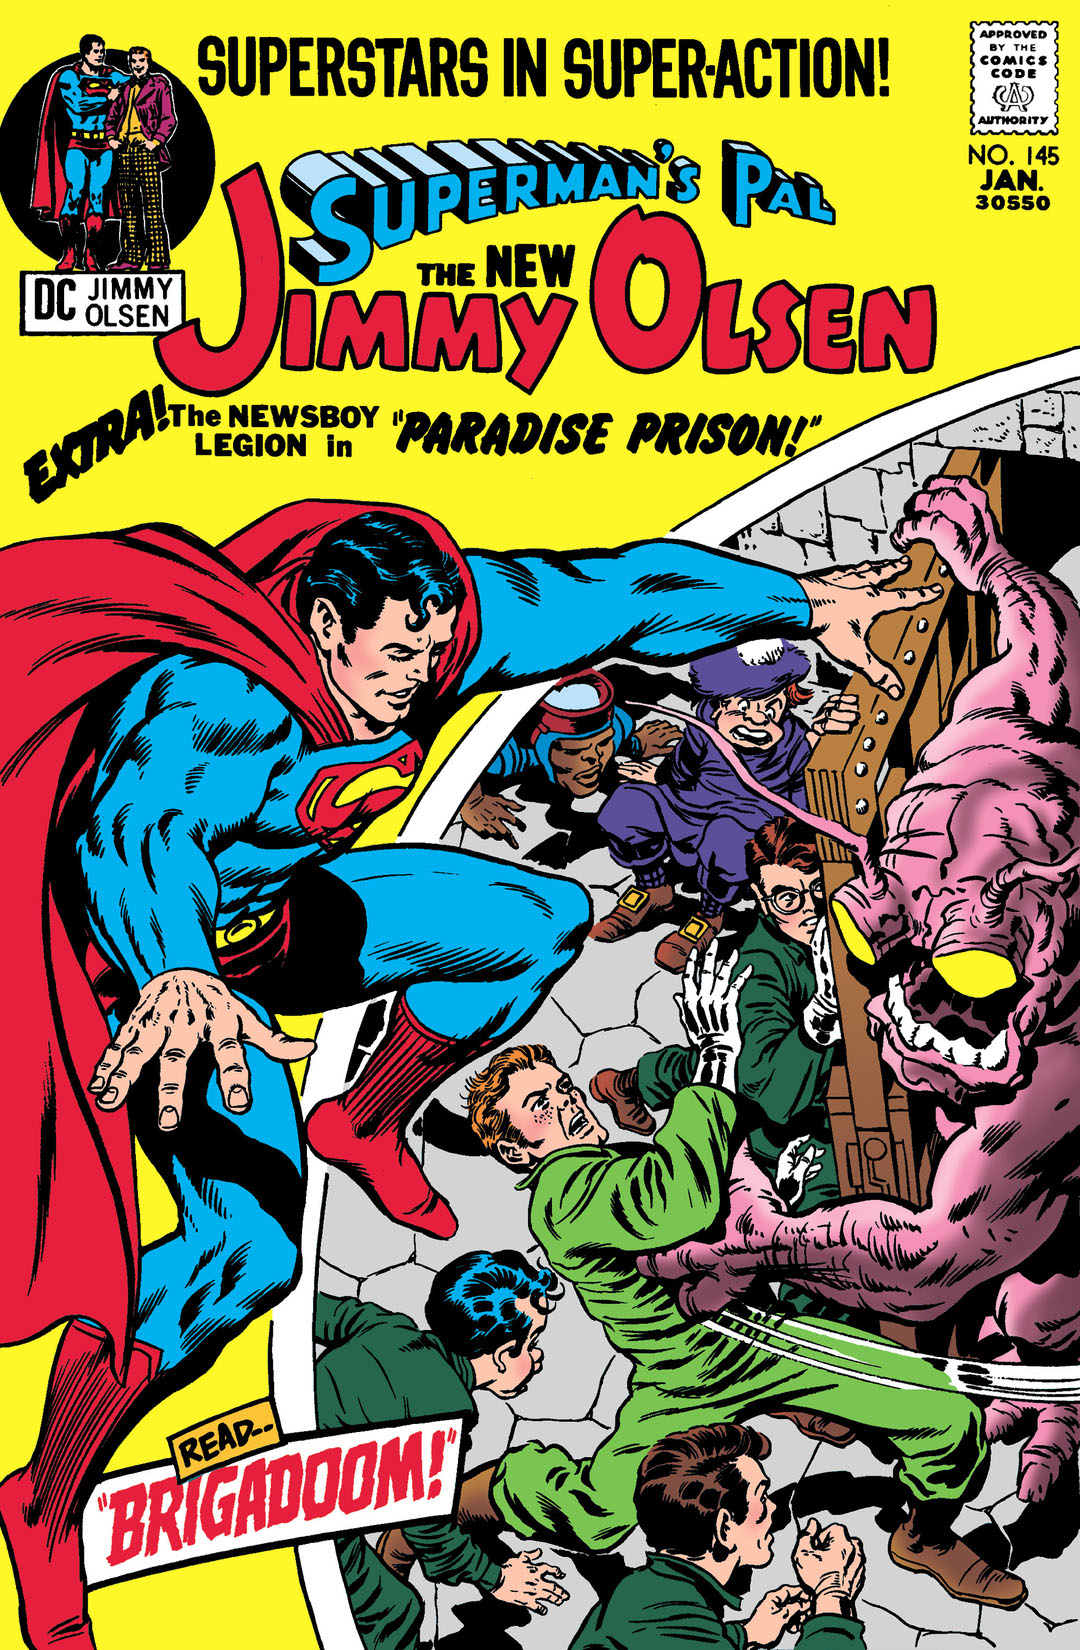 Superman's Pal, Jimmy Olsen #145 preview images